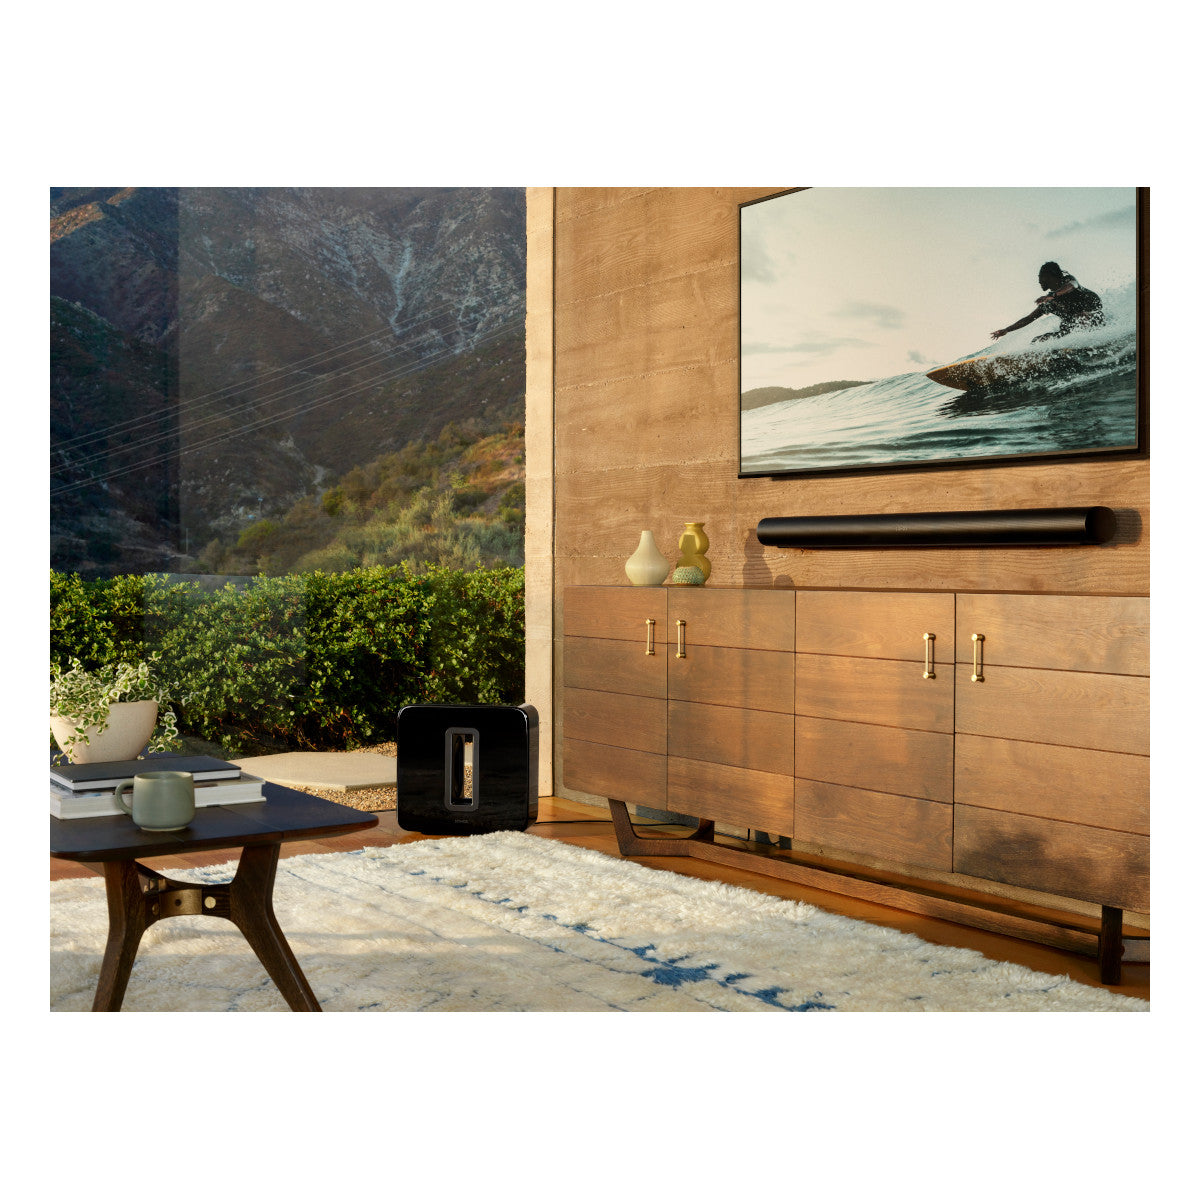 Sonos Arc - The Premium Smart Soundbar for TV, Movies, Music, Gaming, and  More - Black …